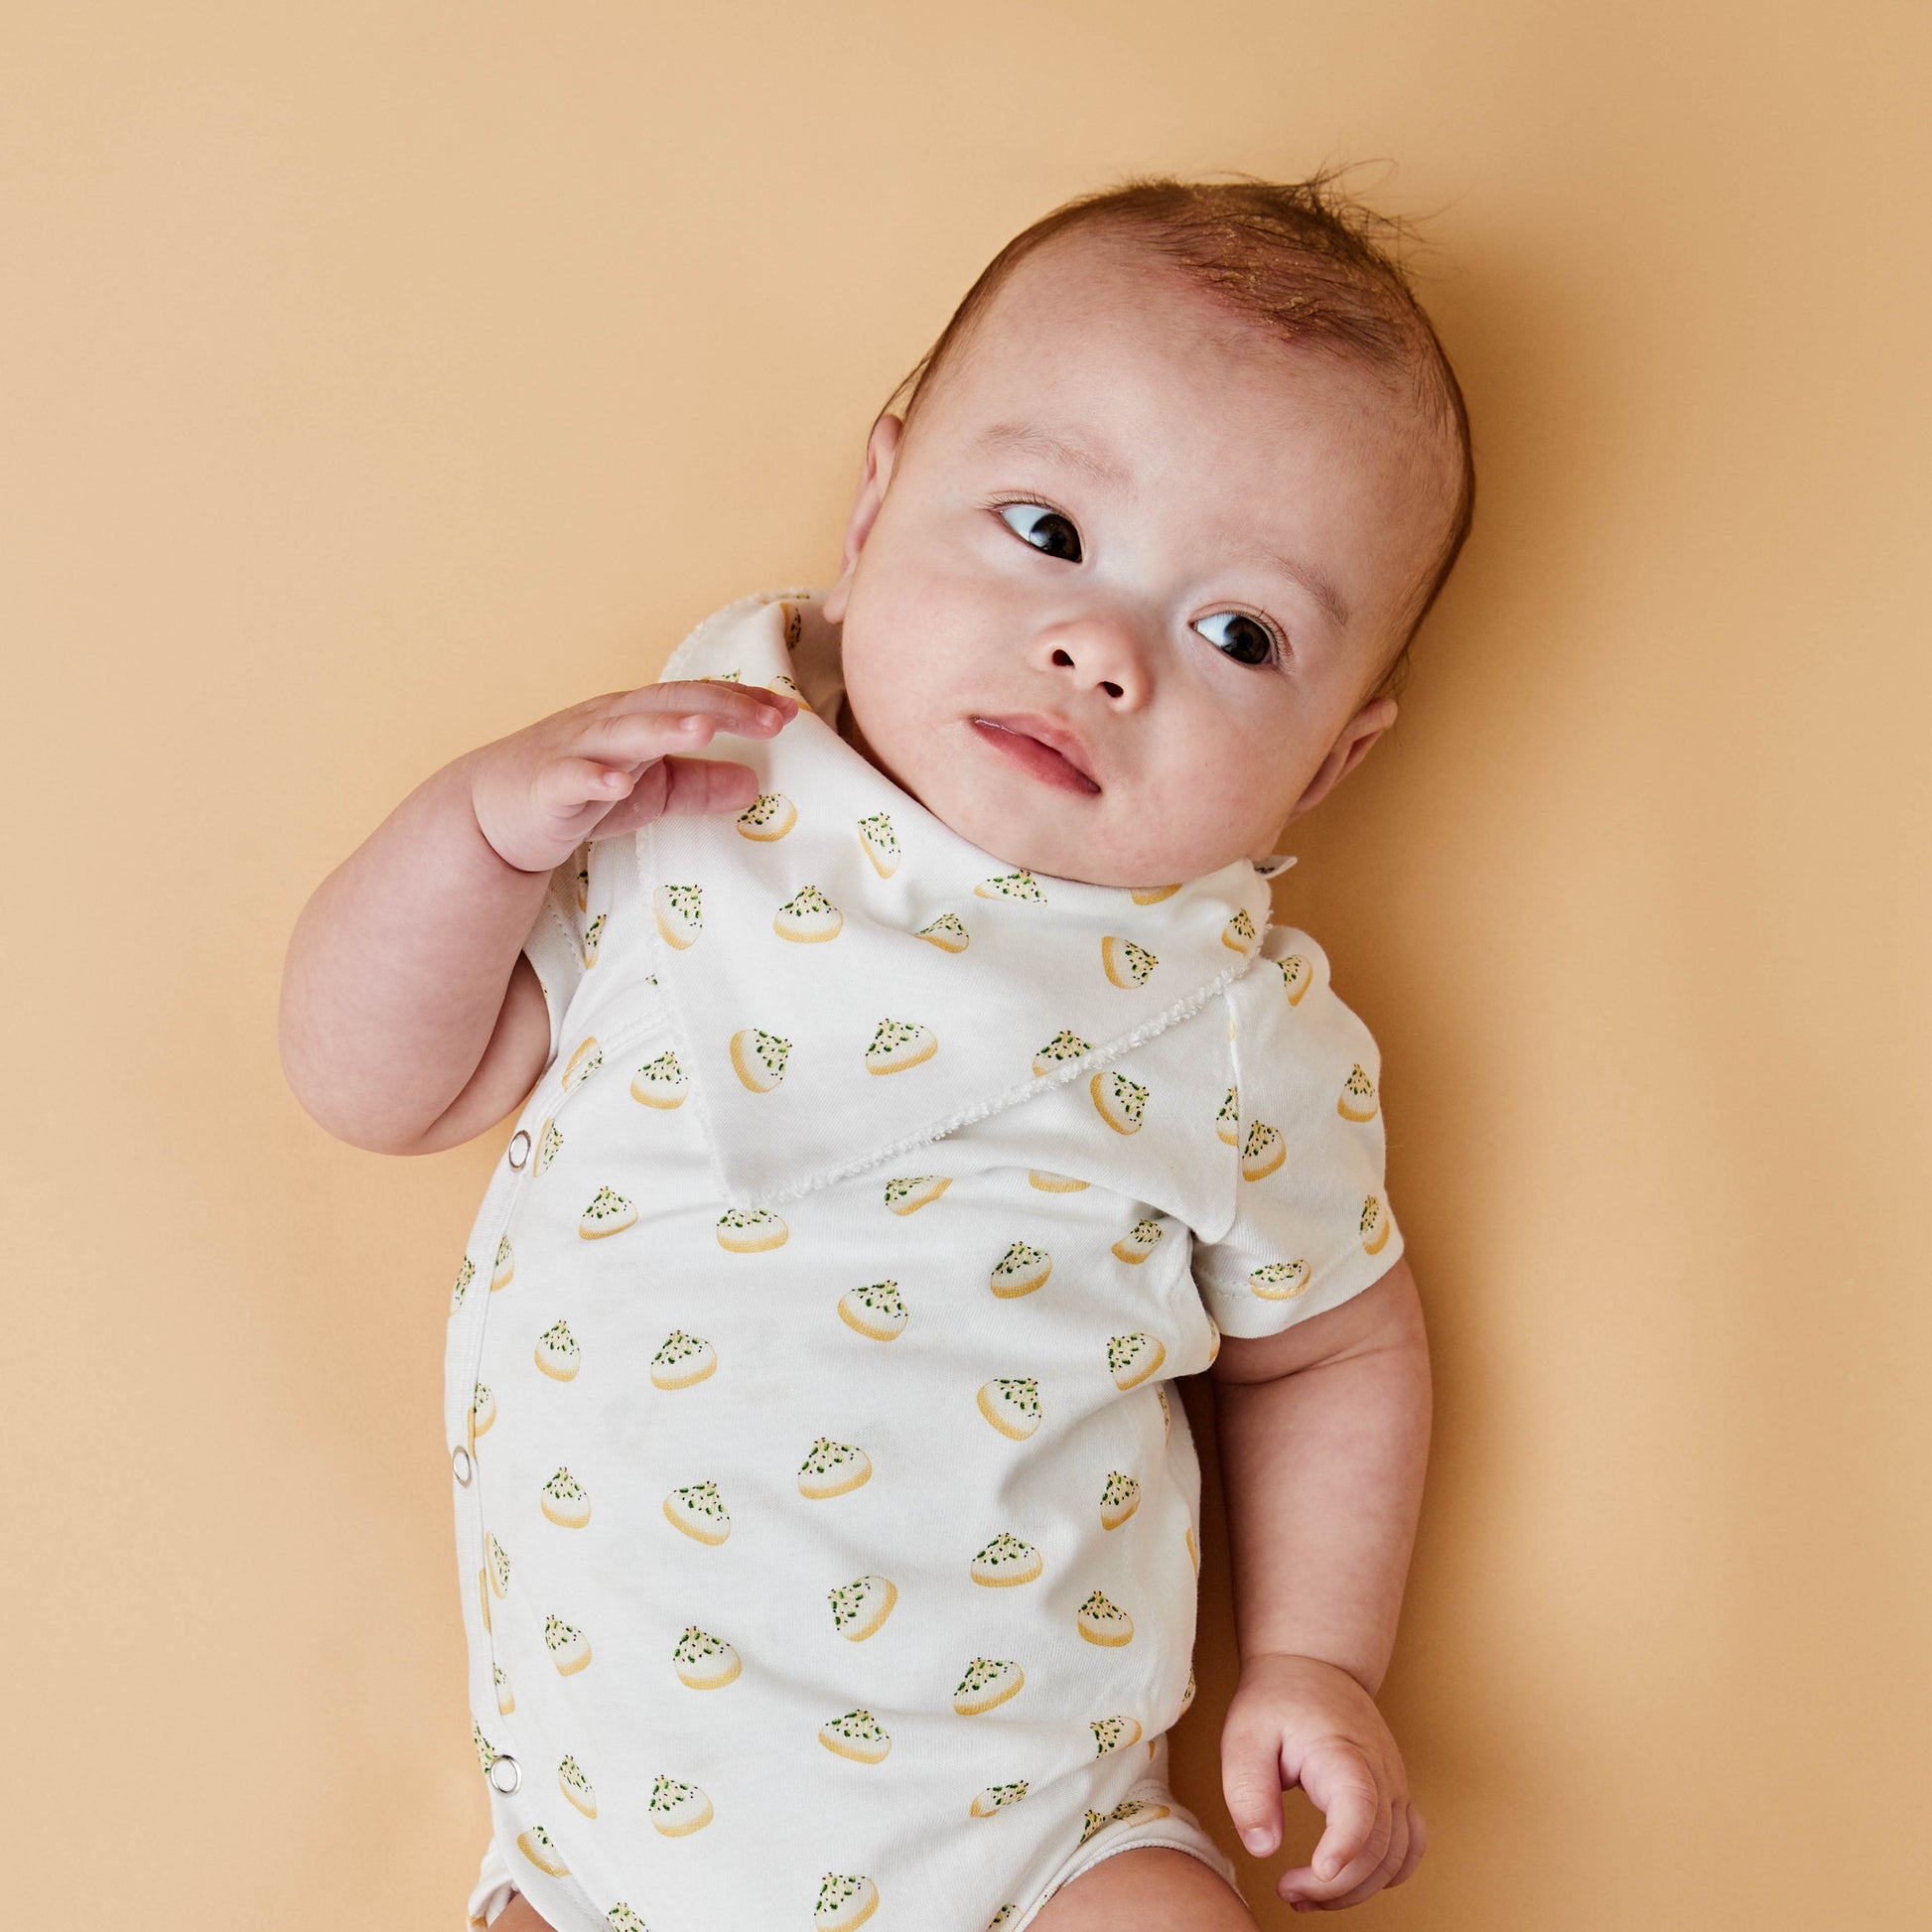 Baby with dumpling inspired bib and baby bodysuit 